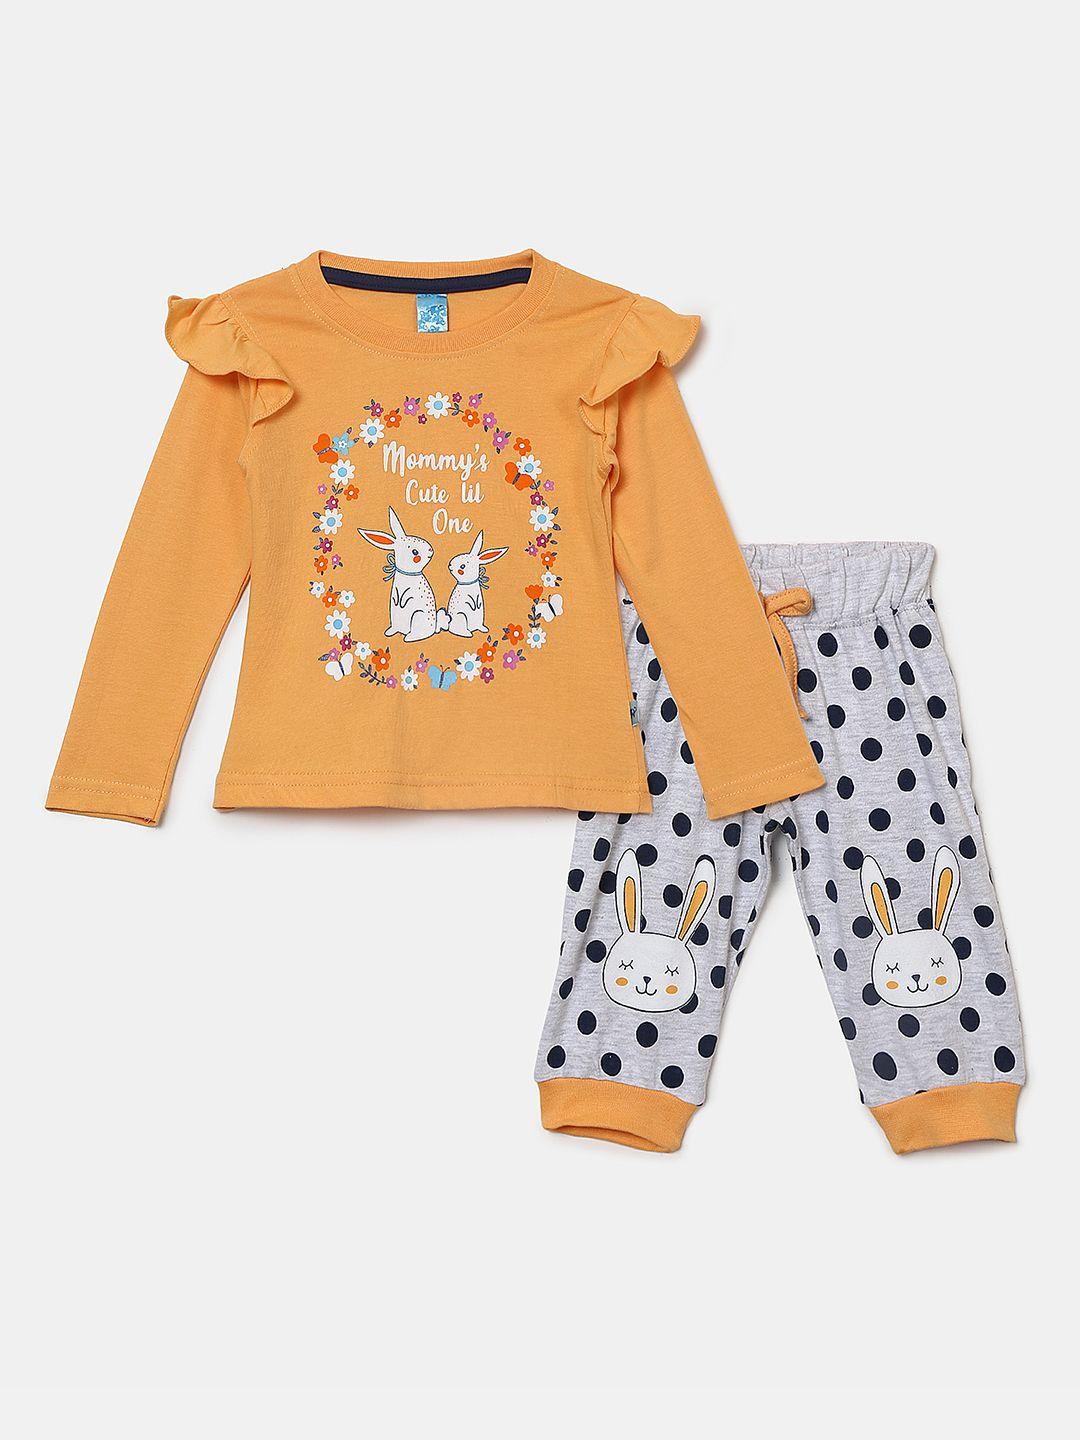 v-mart-kids-mustard-&-black-printed-pure-cotton-top-with-pyjamas